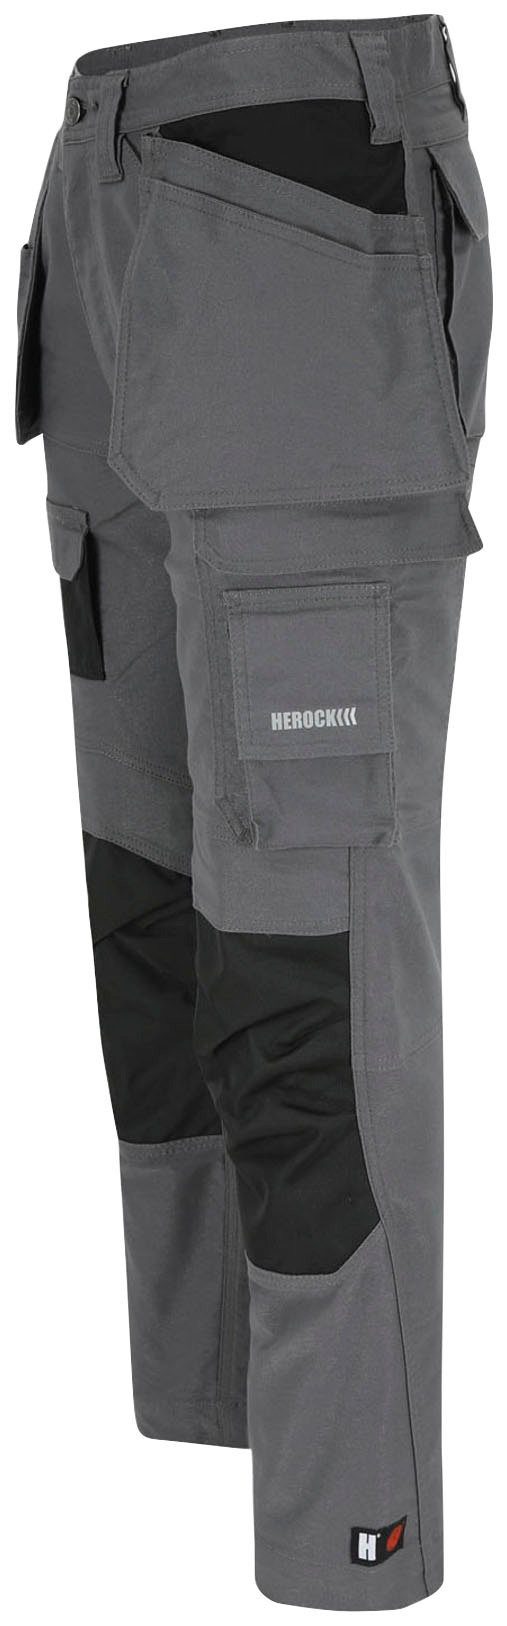 HEROCLES Herock feste Technologie) robust, (Coolmax® grau sehr Stretch, Arbeitshose Multi-pocket, Nageltaschen